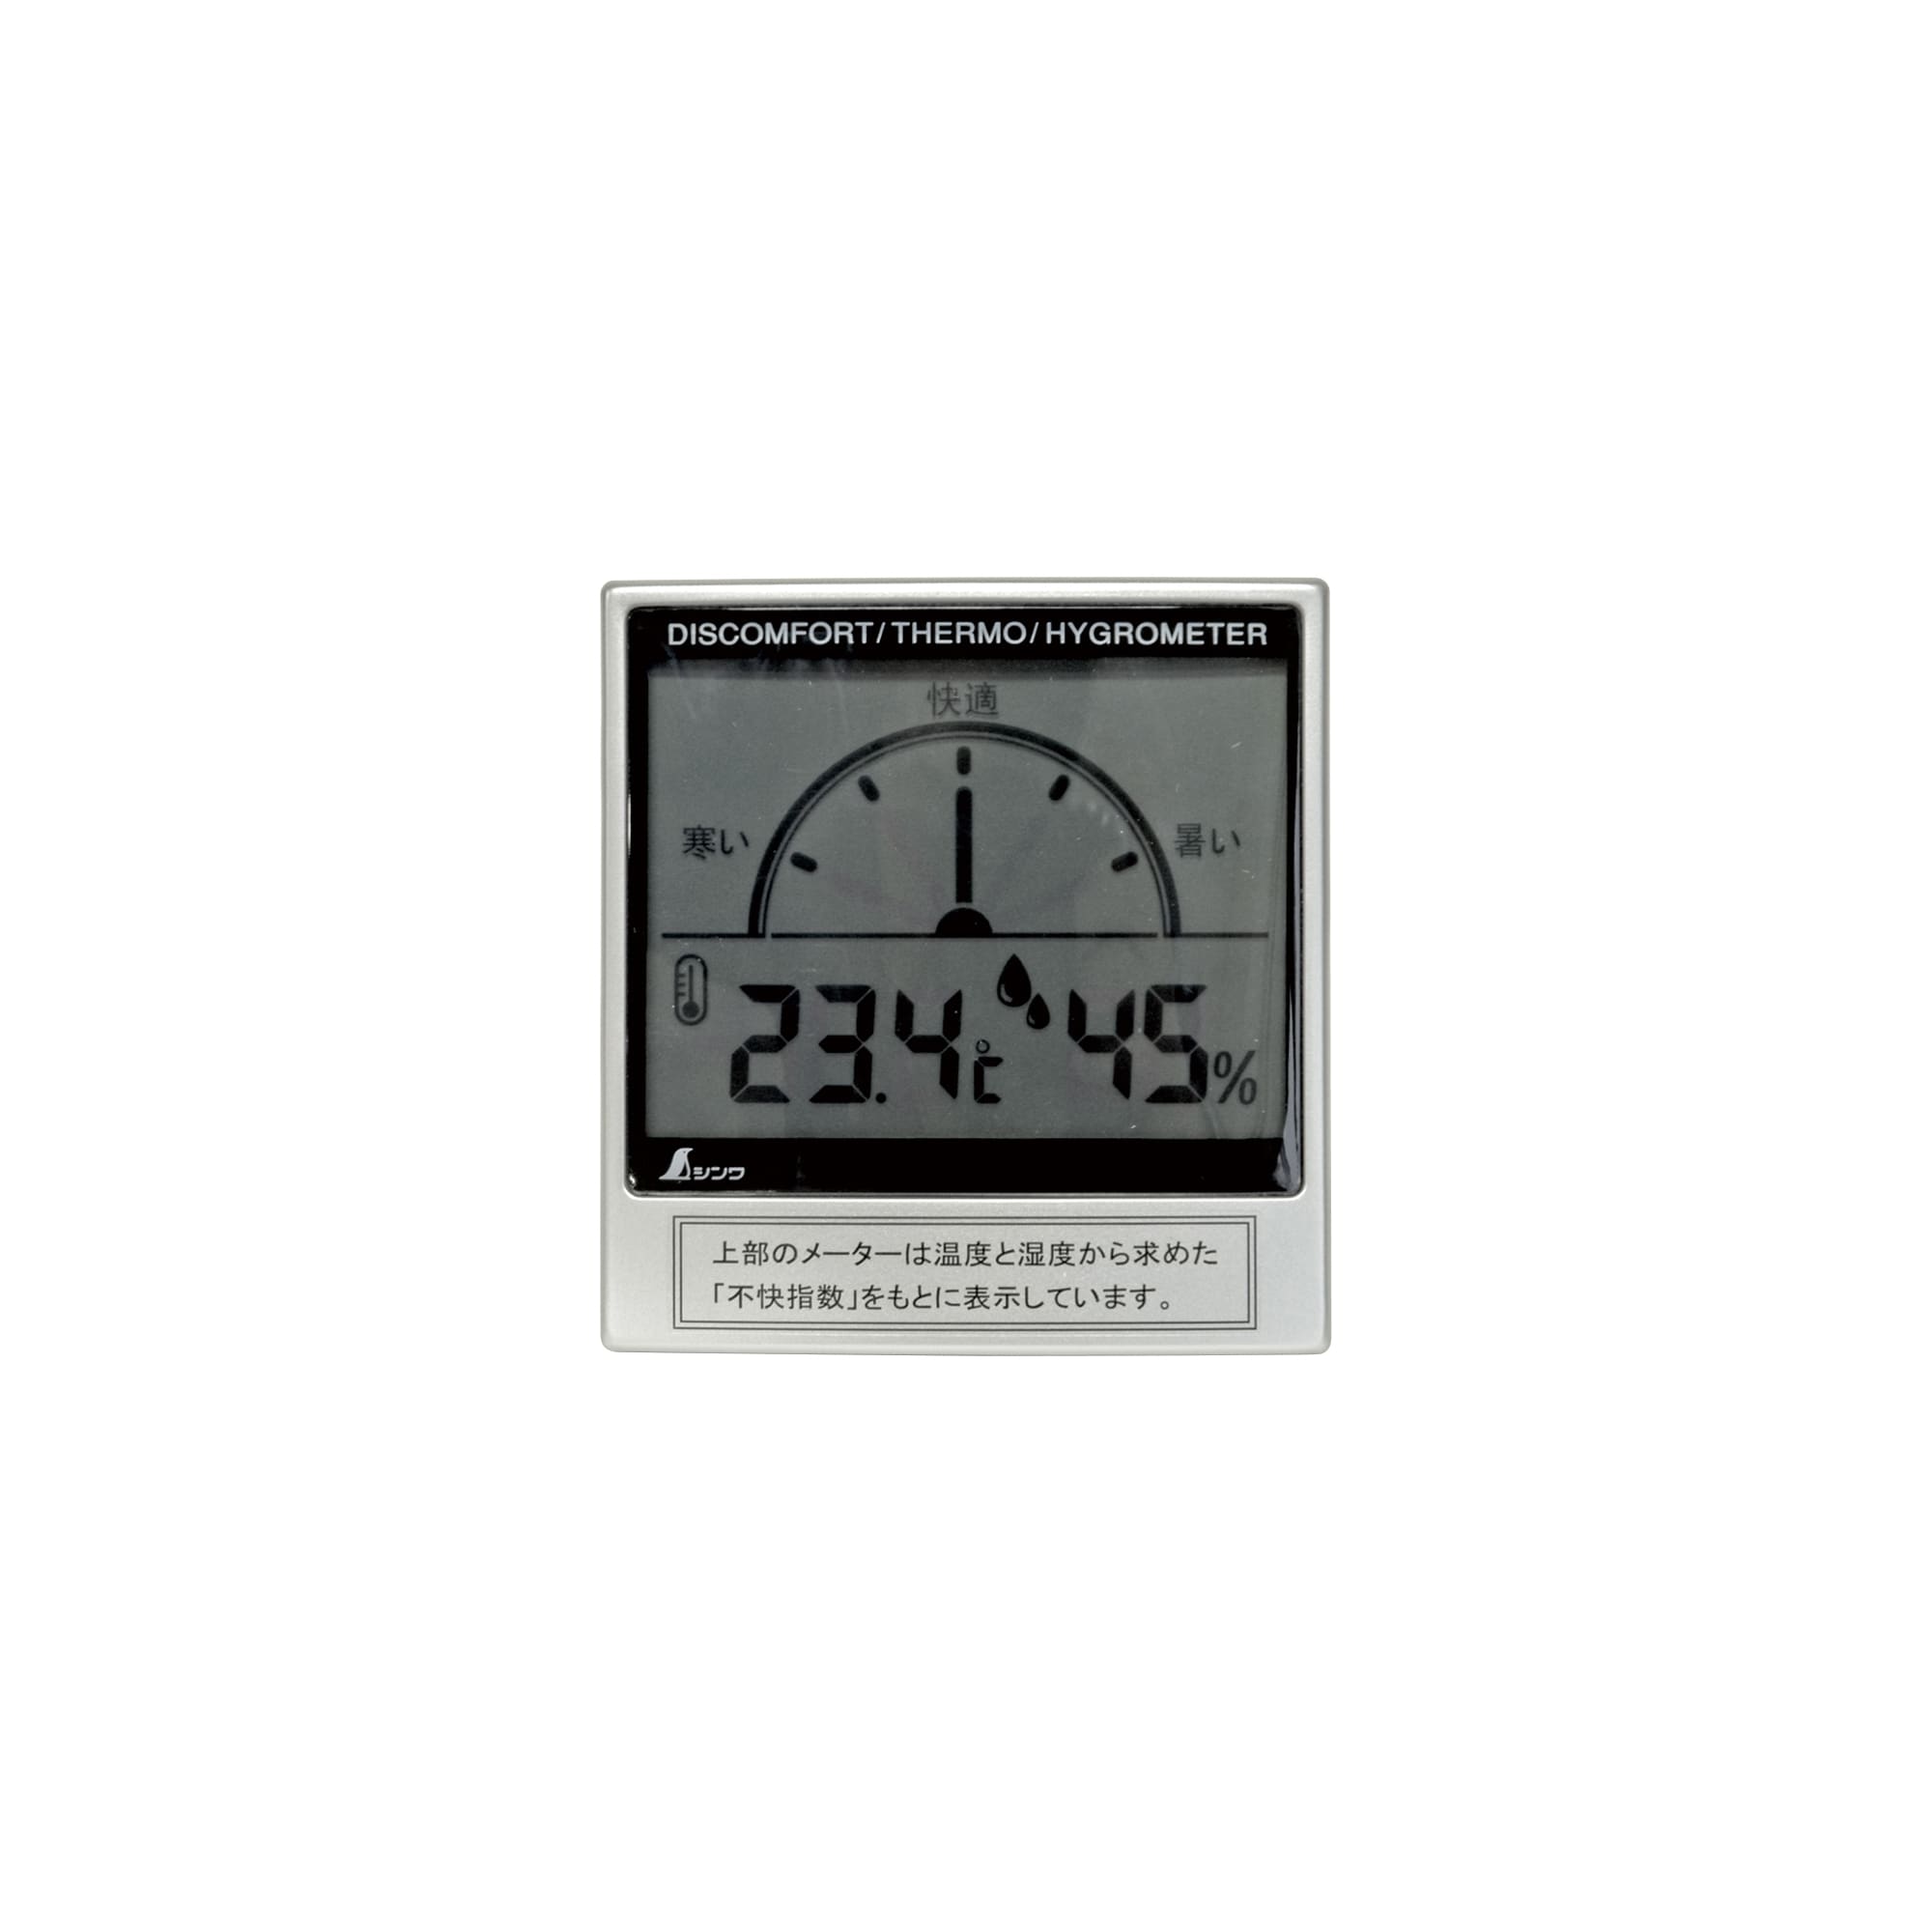 73056  Indoor Thermometer-Hygrometer - Digital, Wall/Desktop Type